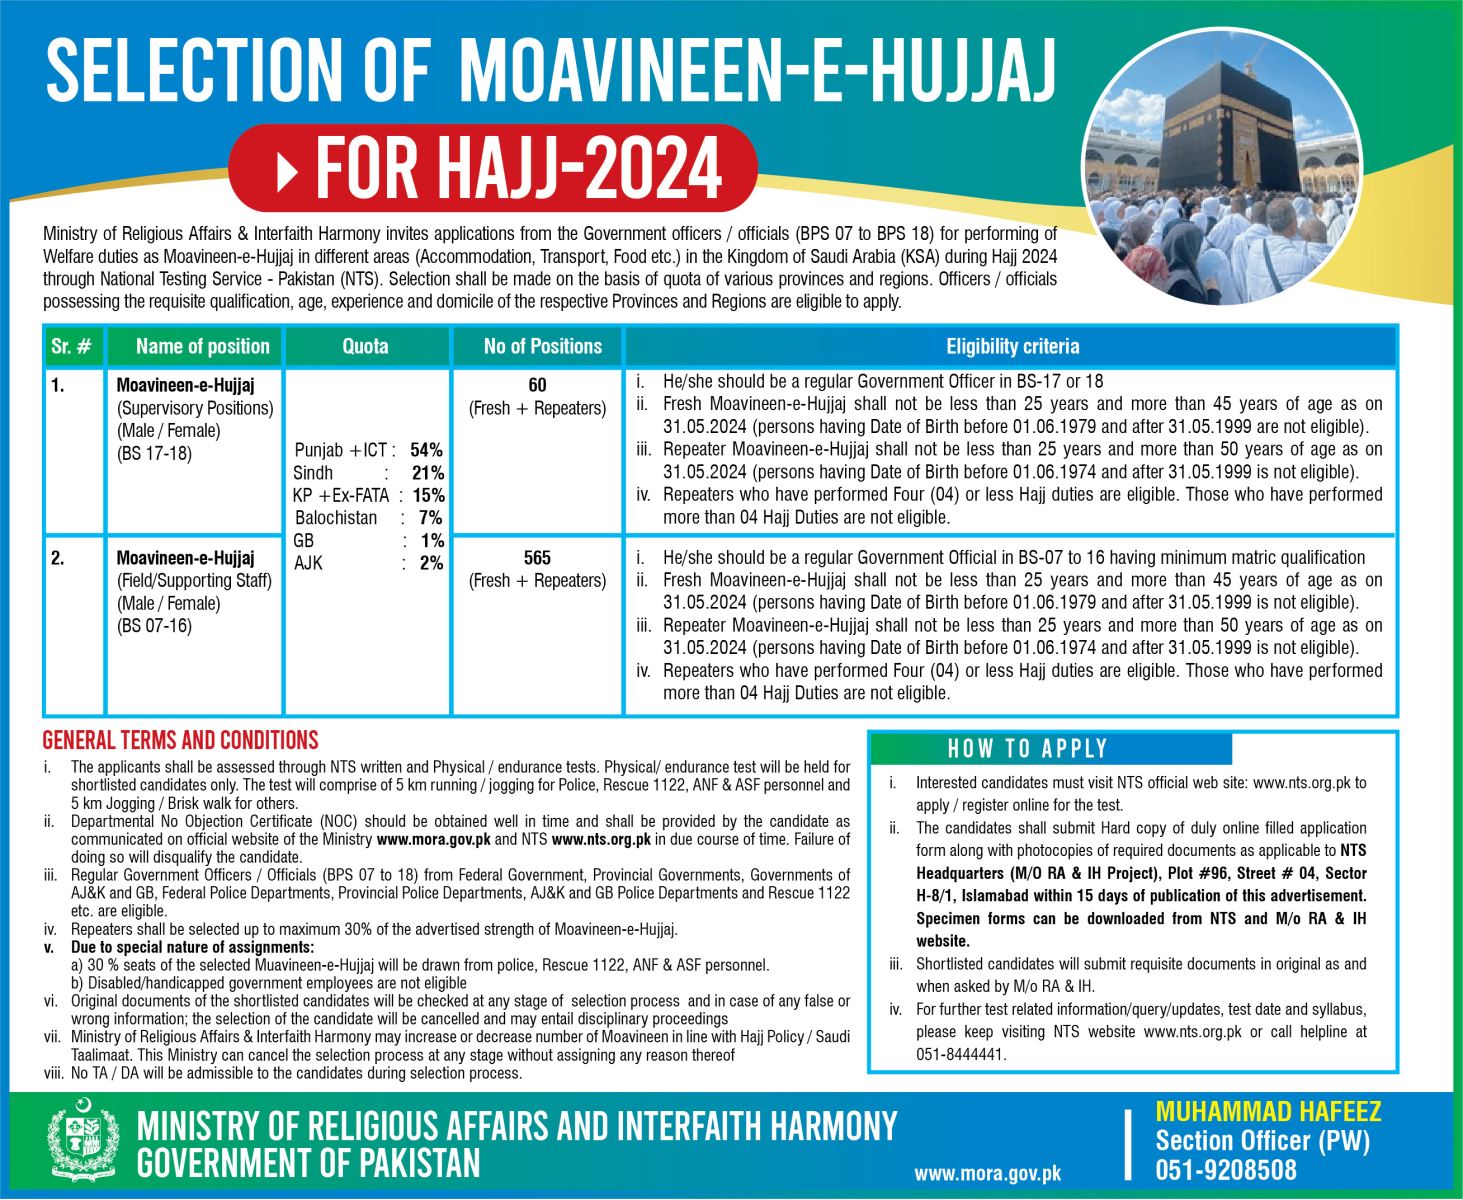 Selection of Moavineen-e-Hujjaj for Hajj 2024